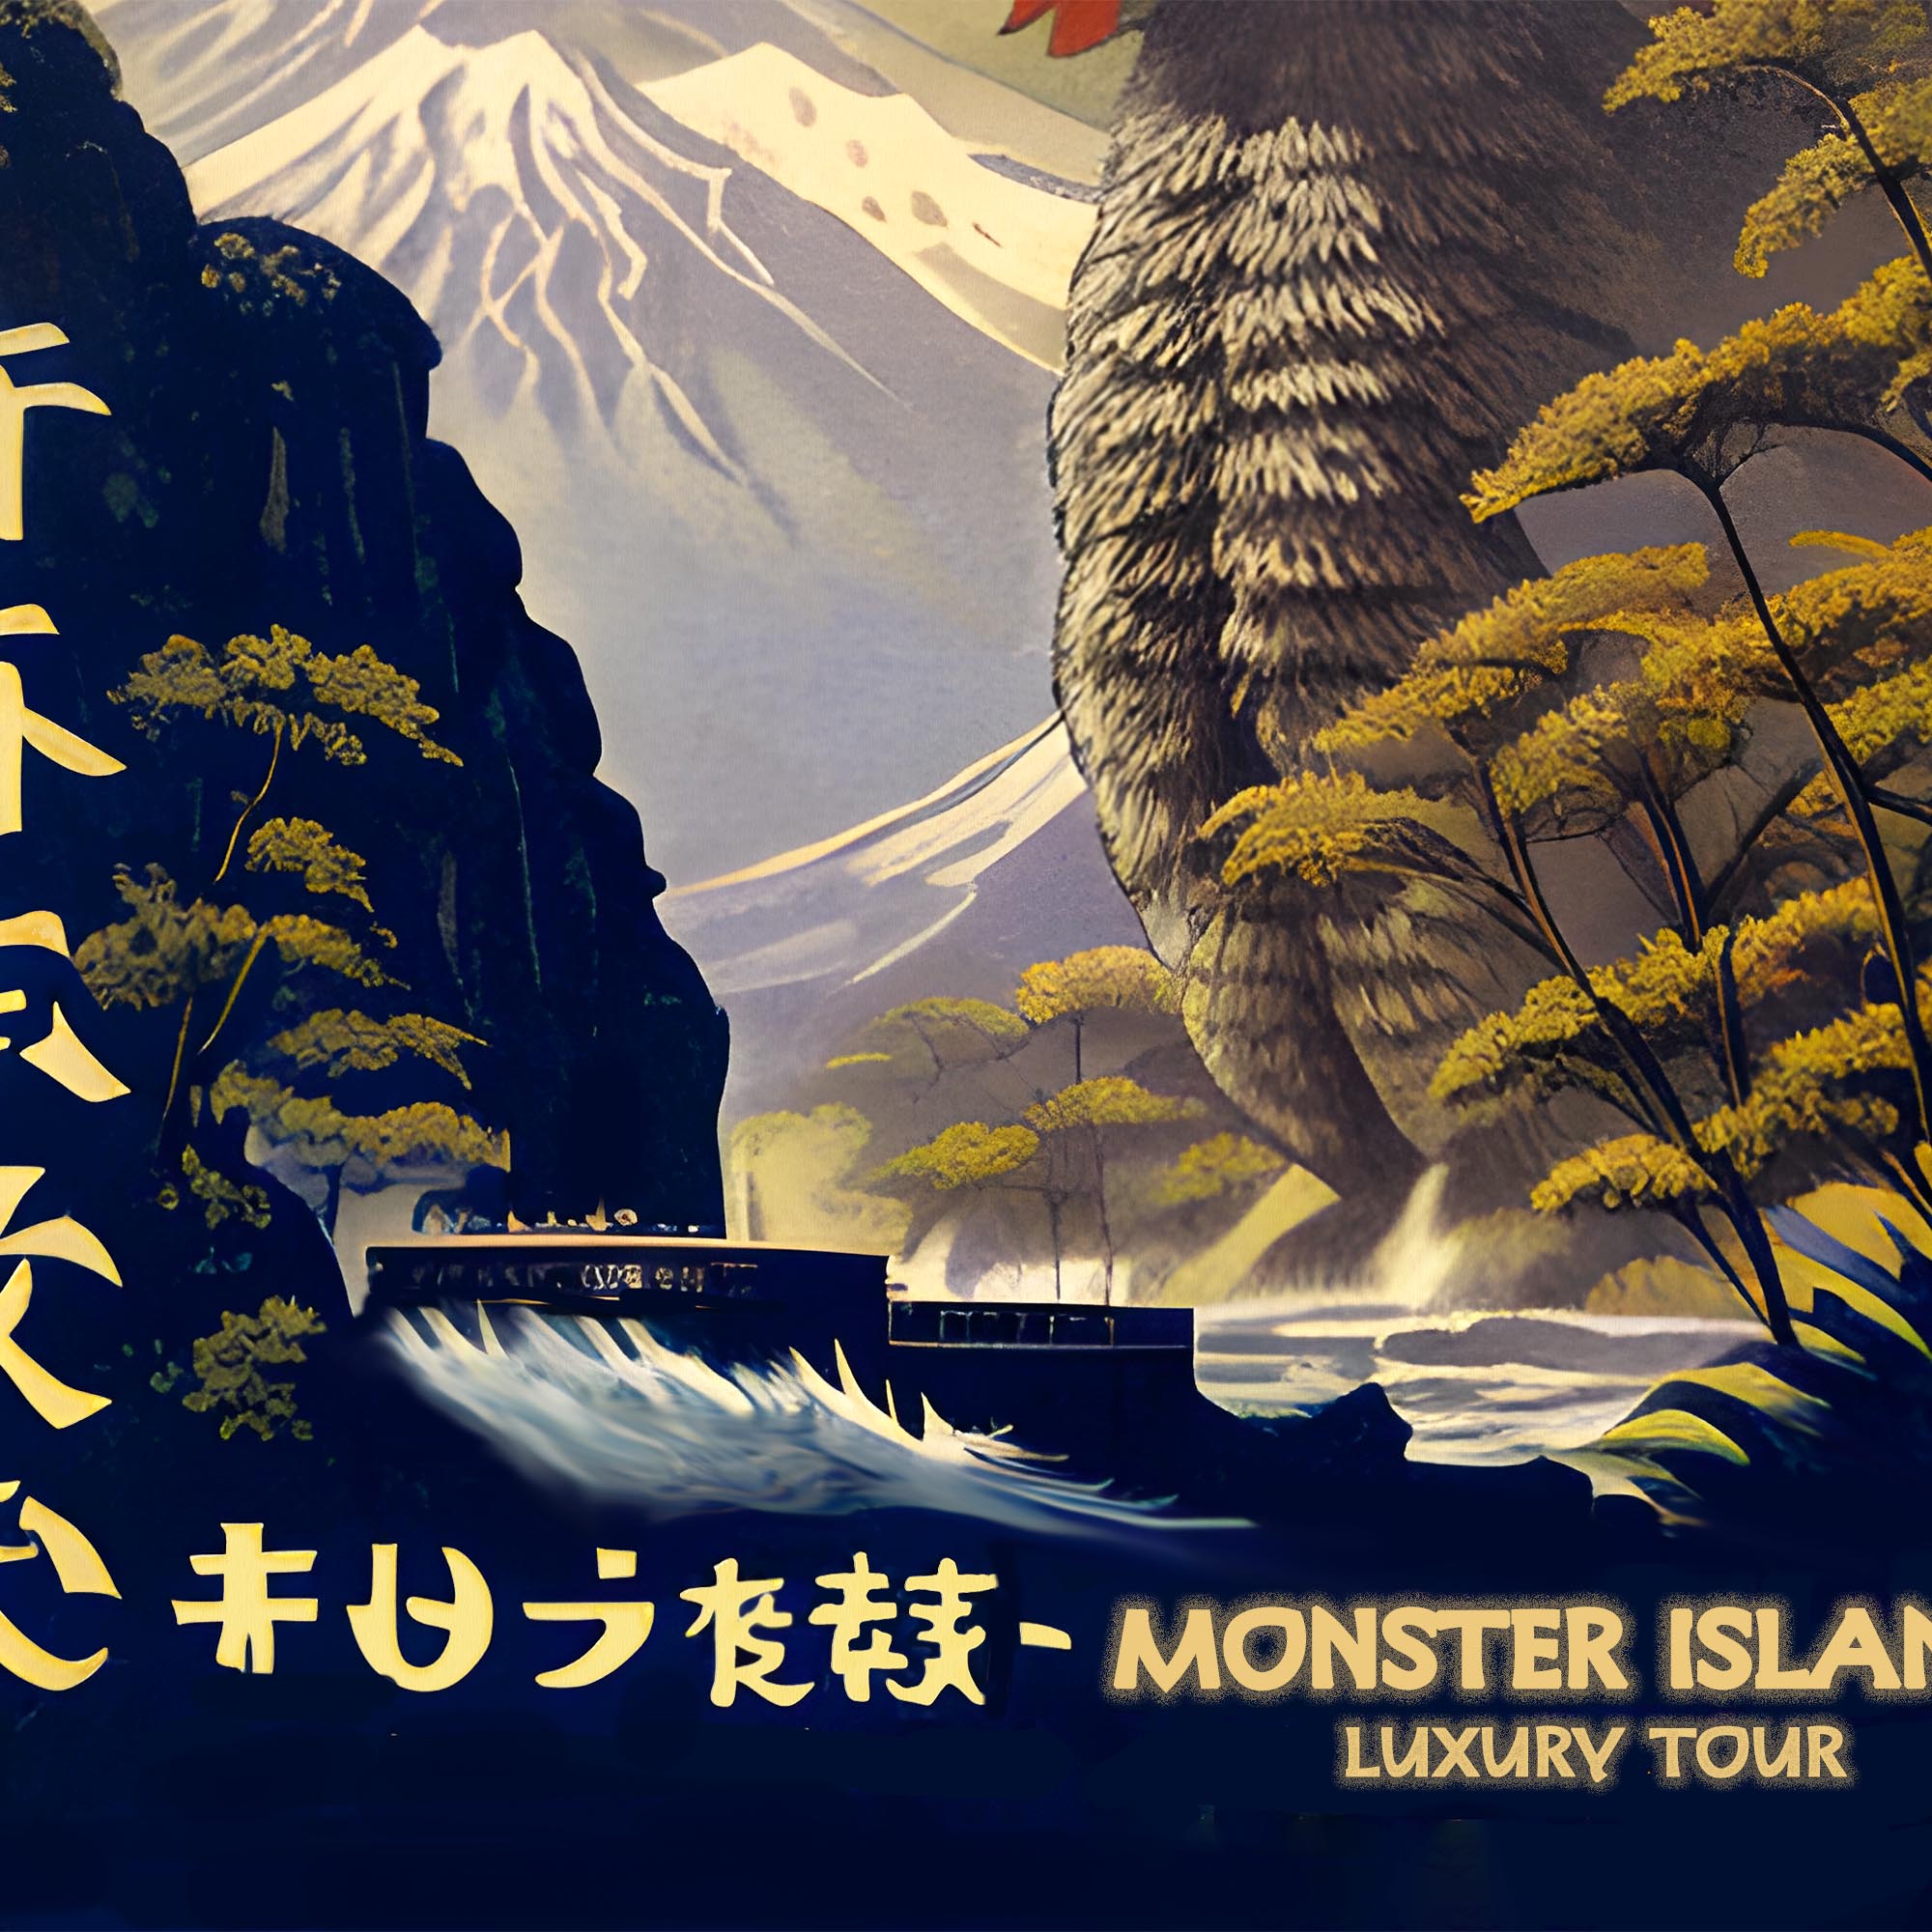 Fine art Kaiju Airlines, Monster Island Tour | Surreal Vintage Travel Poster | Godzilla, Ghidorah, Mothra, King Kong, Gamera Fine Art Print